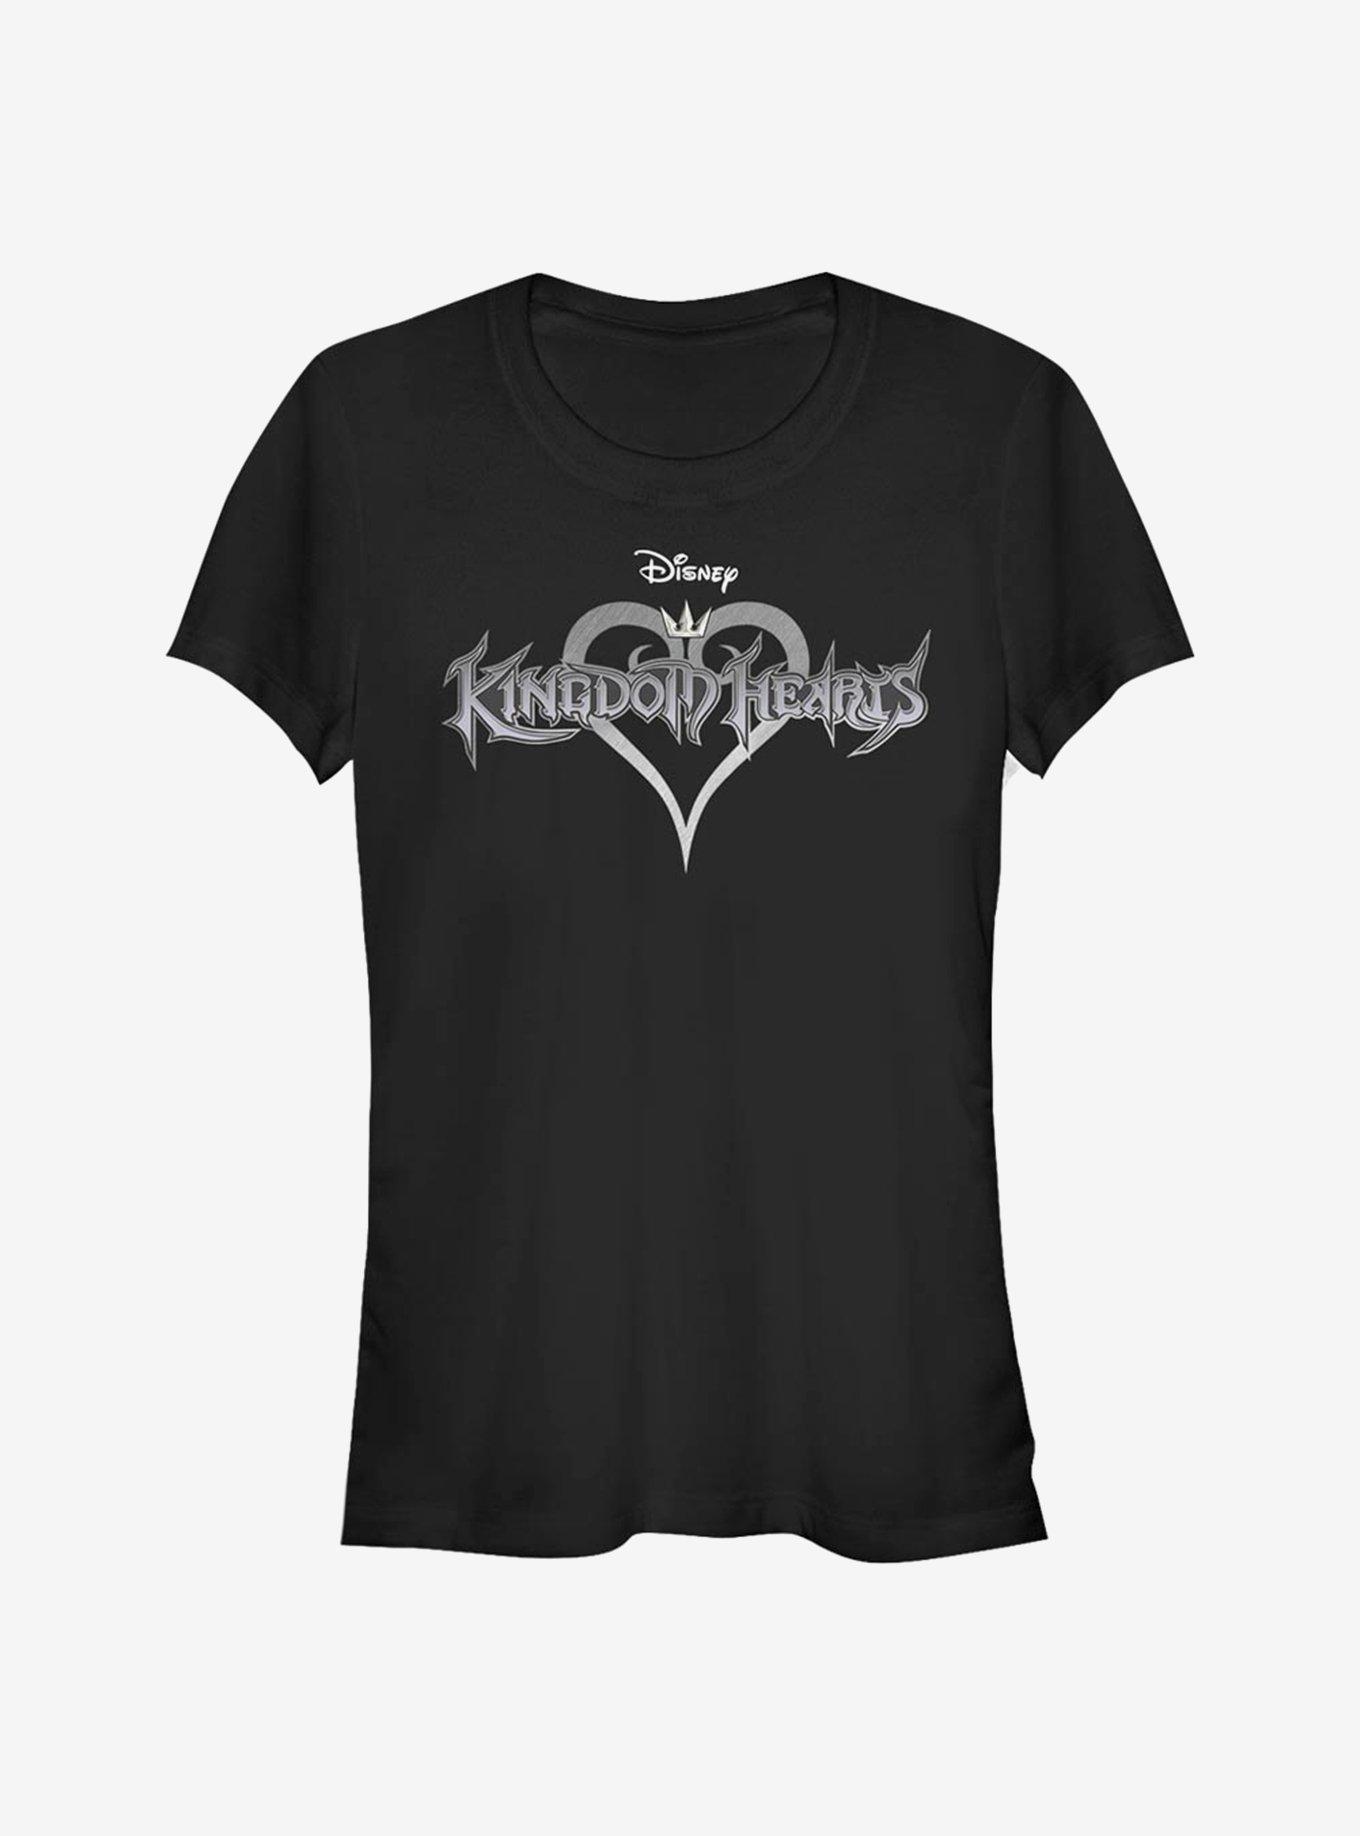 Disney Kingdom Hearts Logo Girls T-Shirt